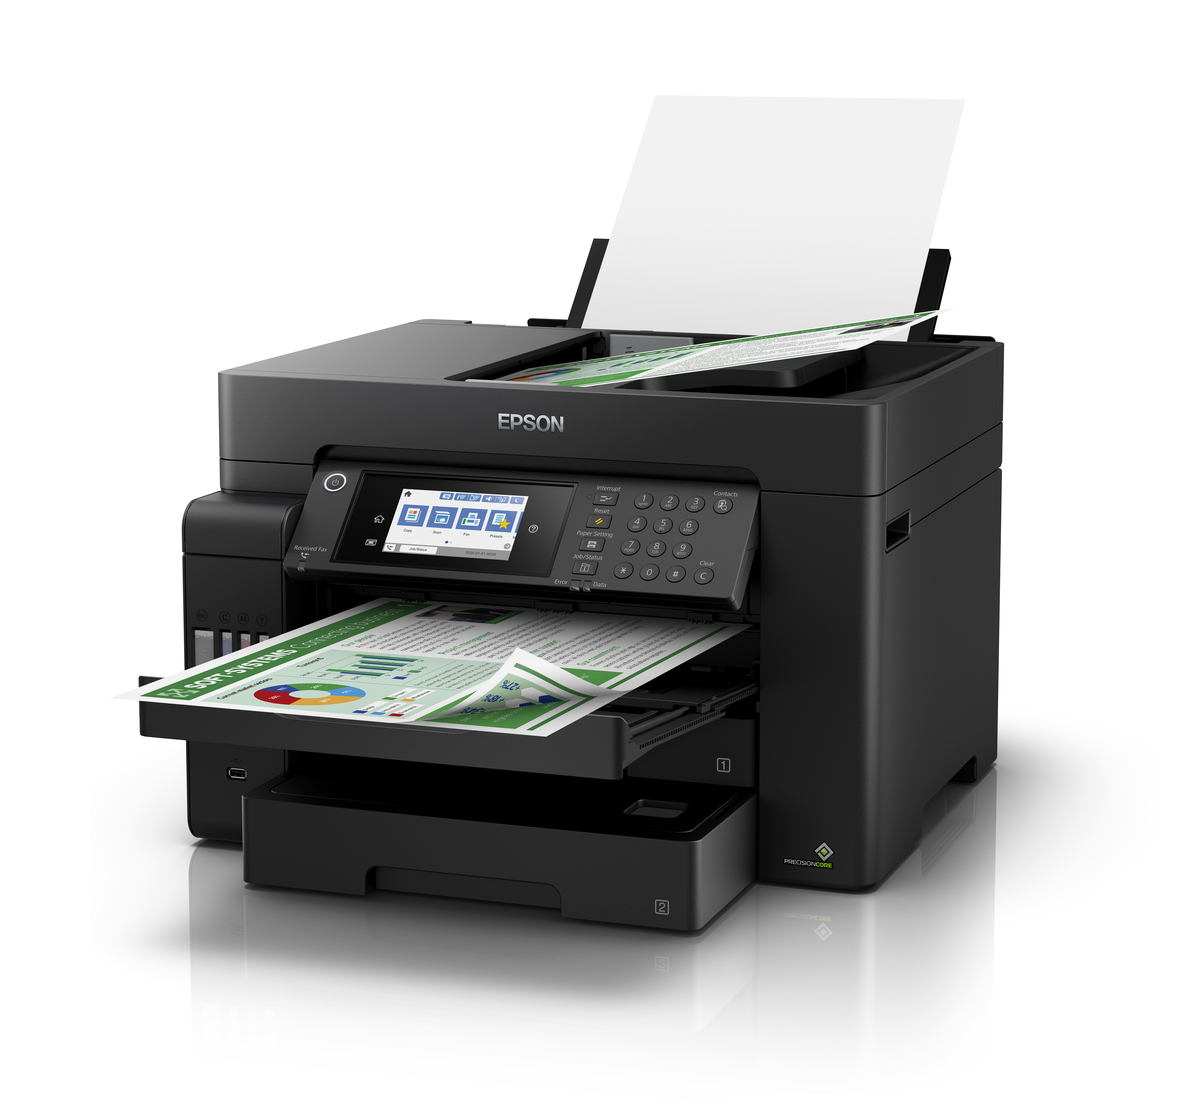 Epson EcoTank L15150 A3 Printer 